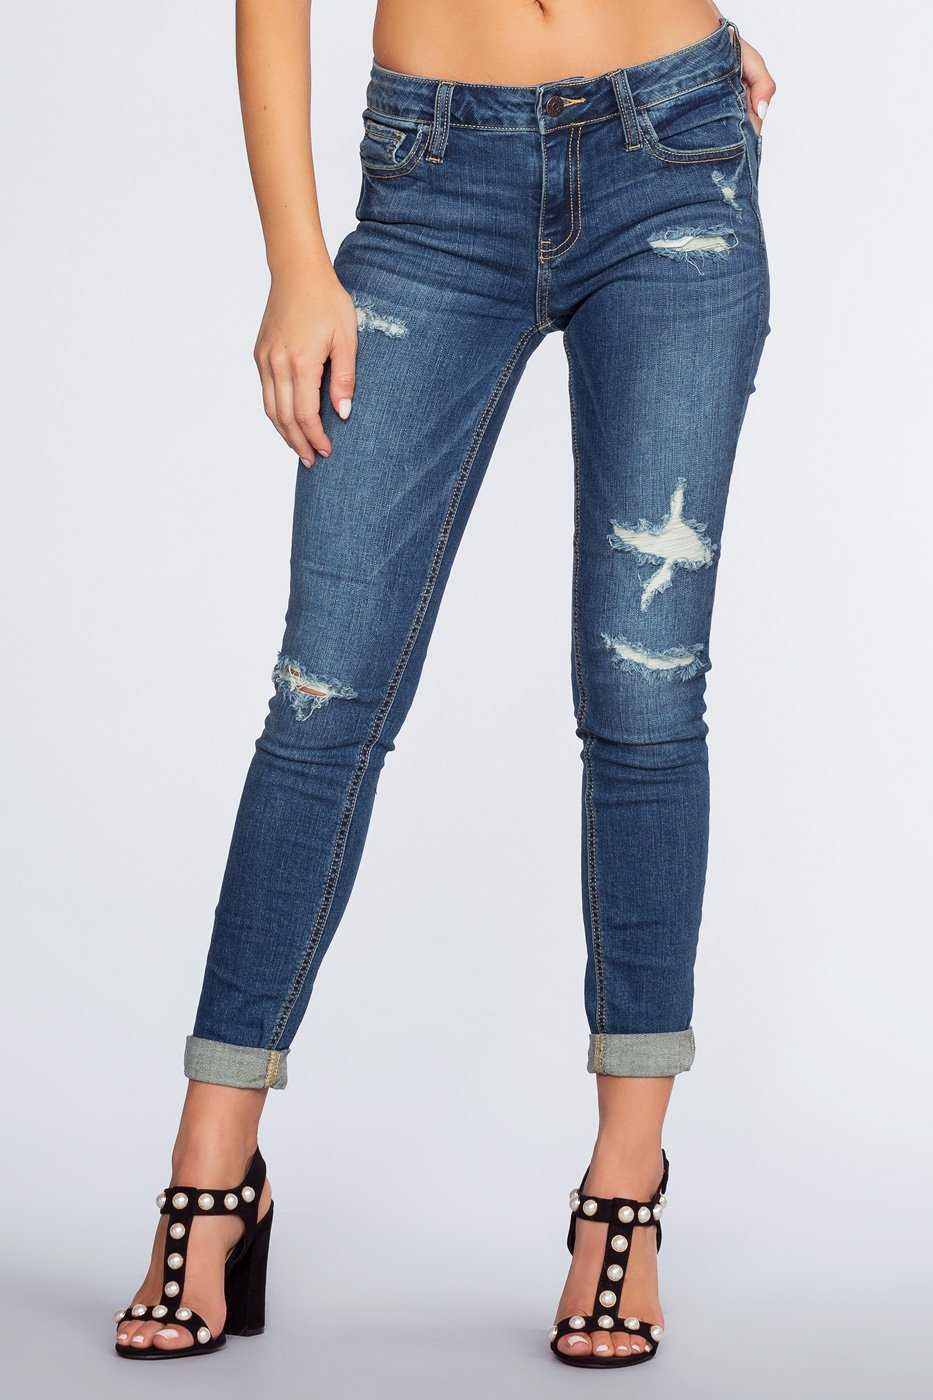 Pants - Harvard Cuffed Jeans